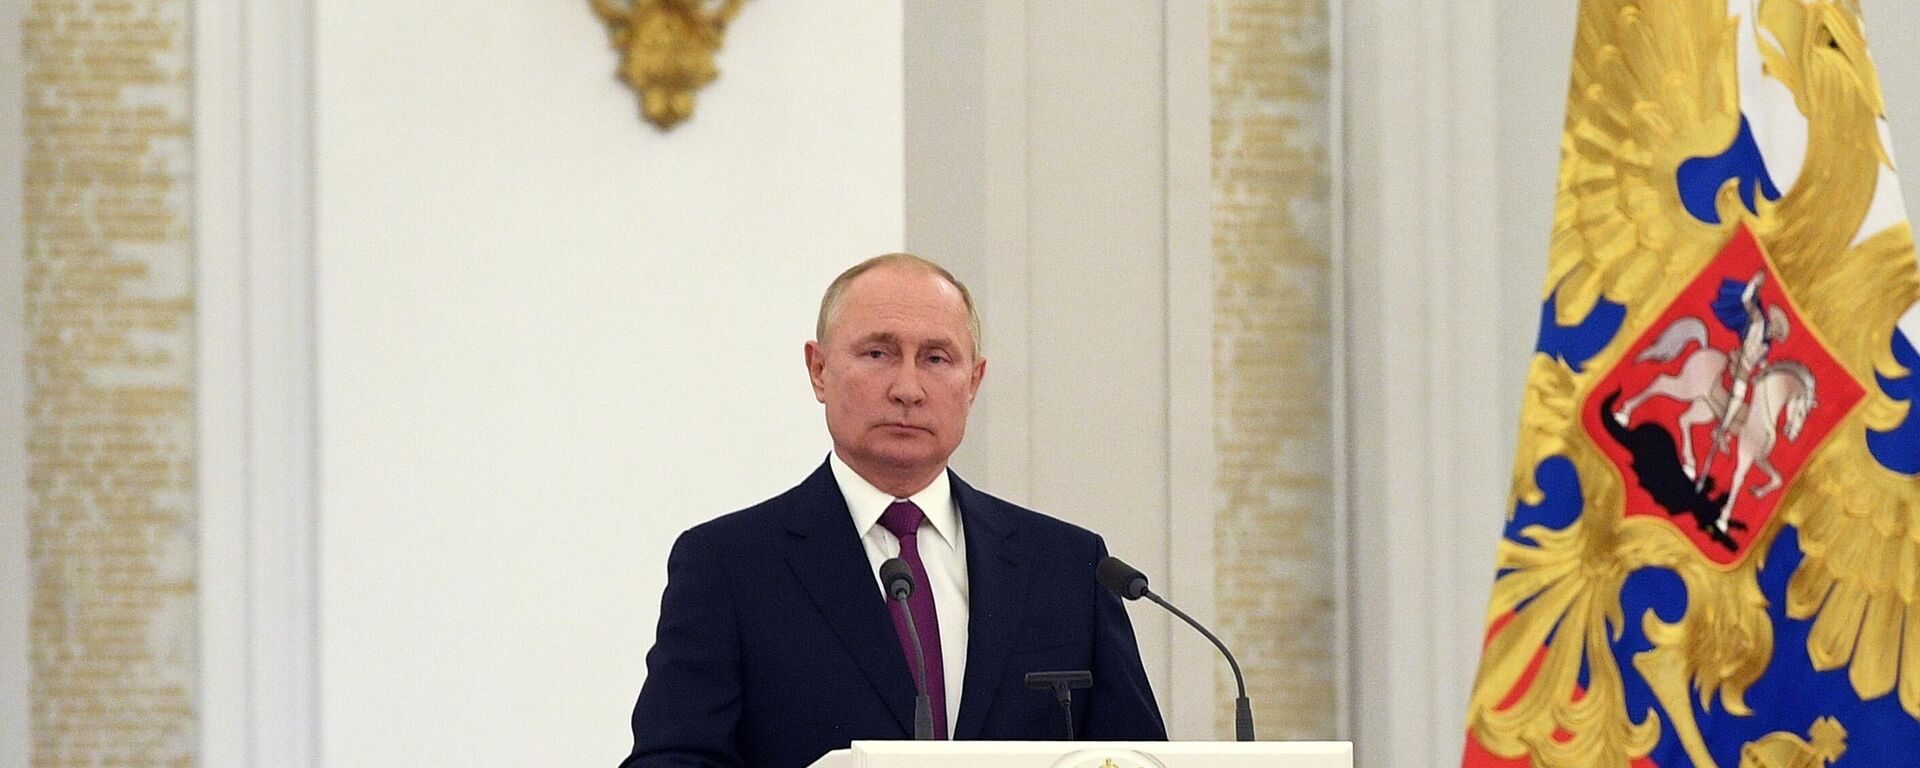 Predsednik Rusije Vladimir Putin - Sputnik Srbija, 1920, 13.10.2021